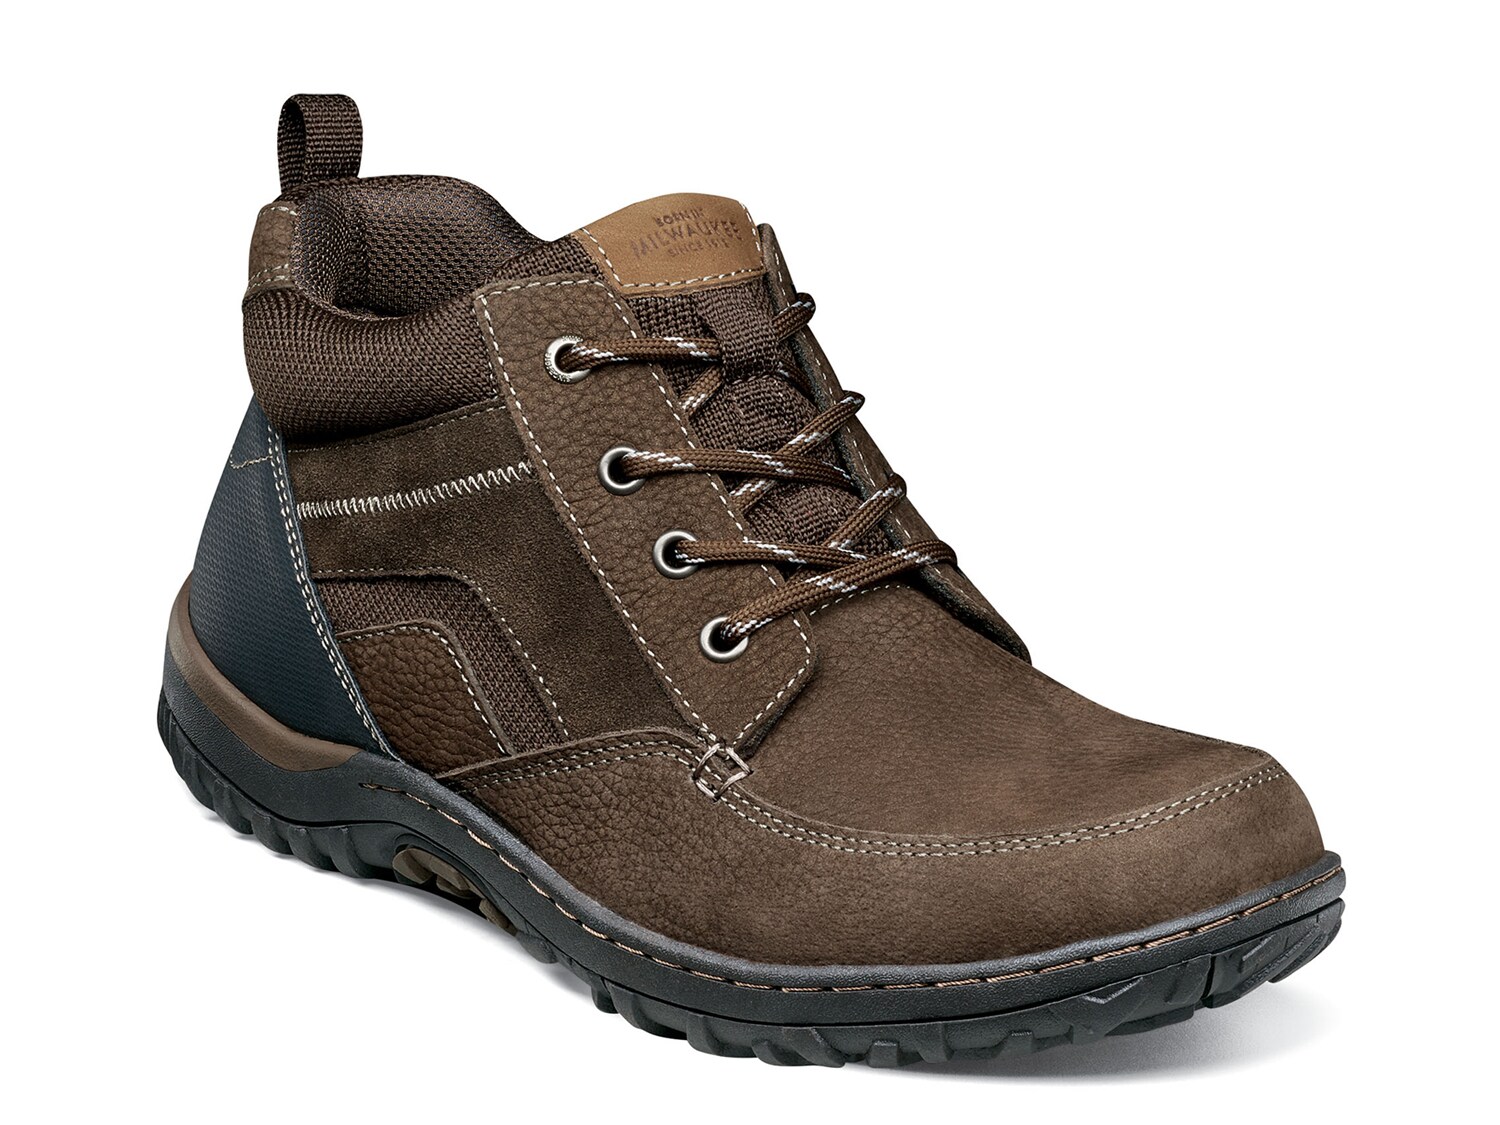 skechers men's segment melego leather chukka waterproof boot